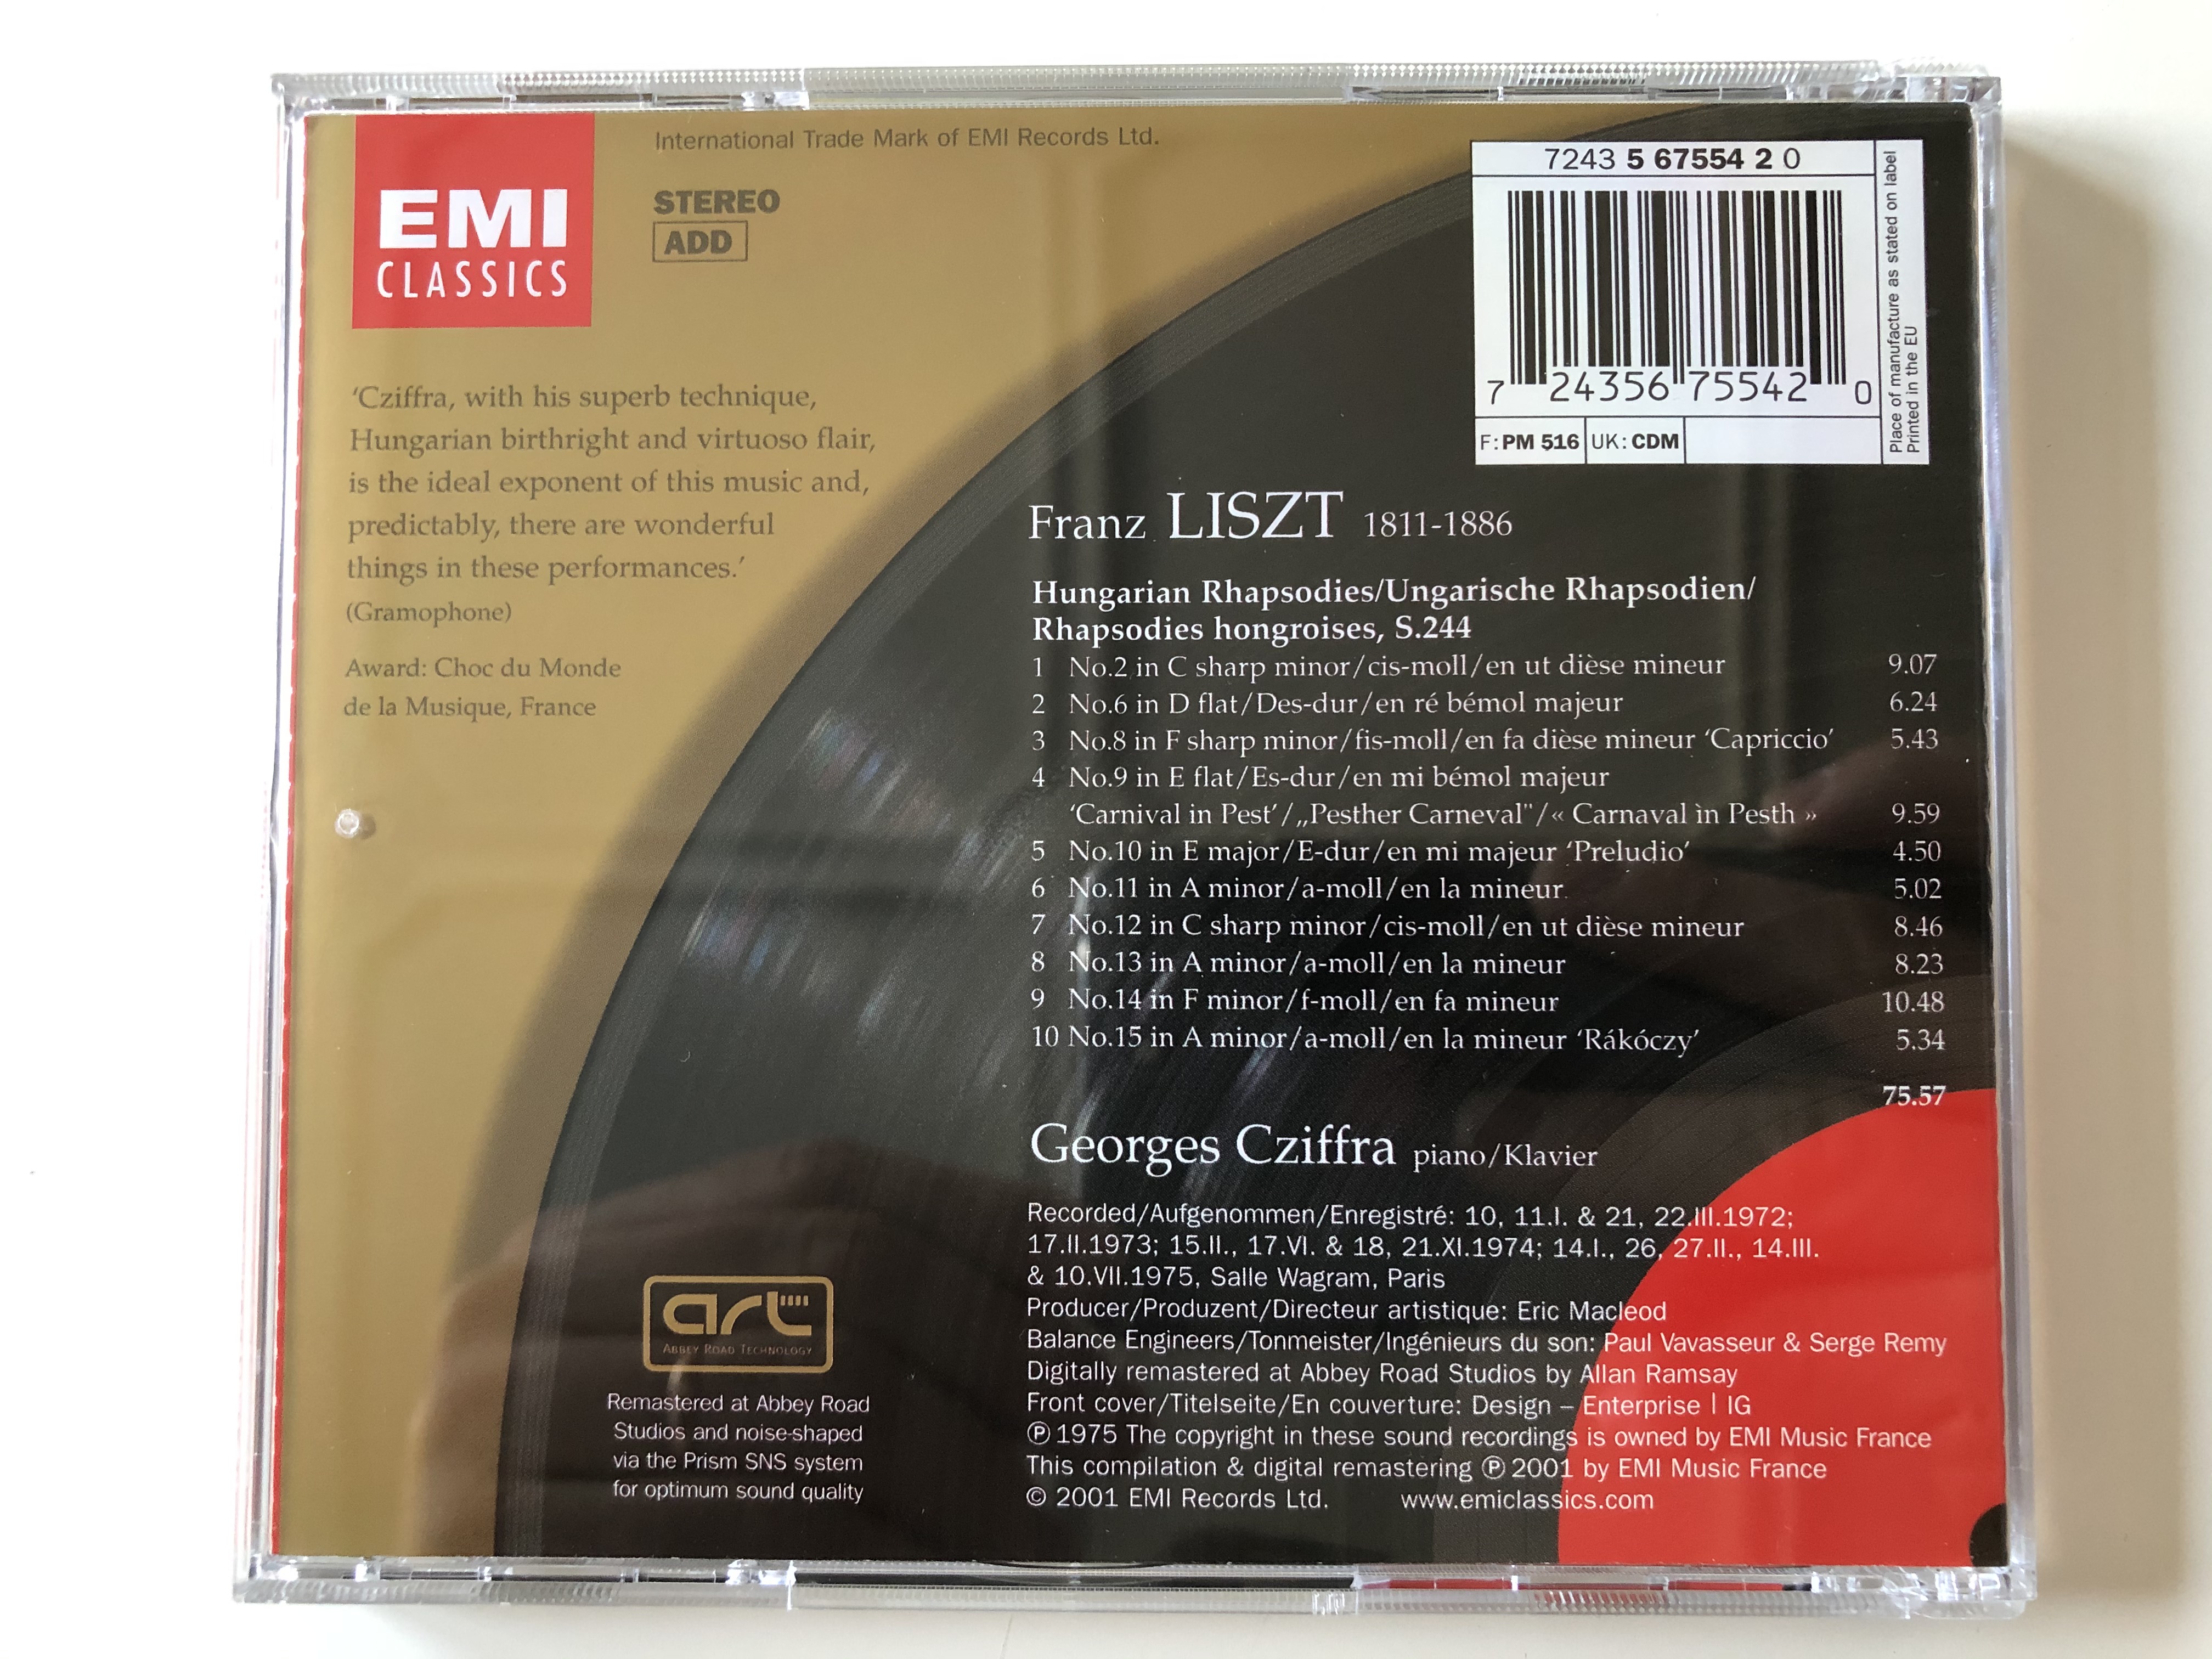 liszt-10-hungarian-rhapsodies-georges-cziffra-great-recordings-of-the-century-emi-classics-audio-cd-2001-stereo-724356755420-6-.jpg